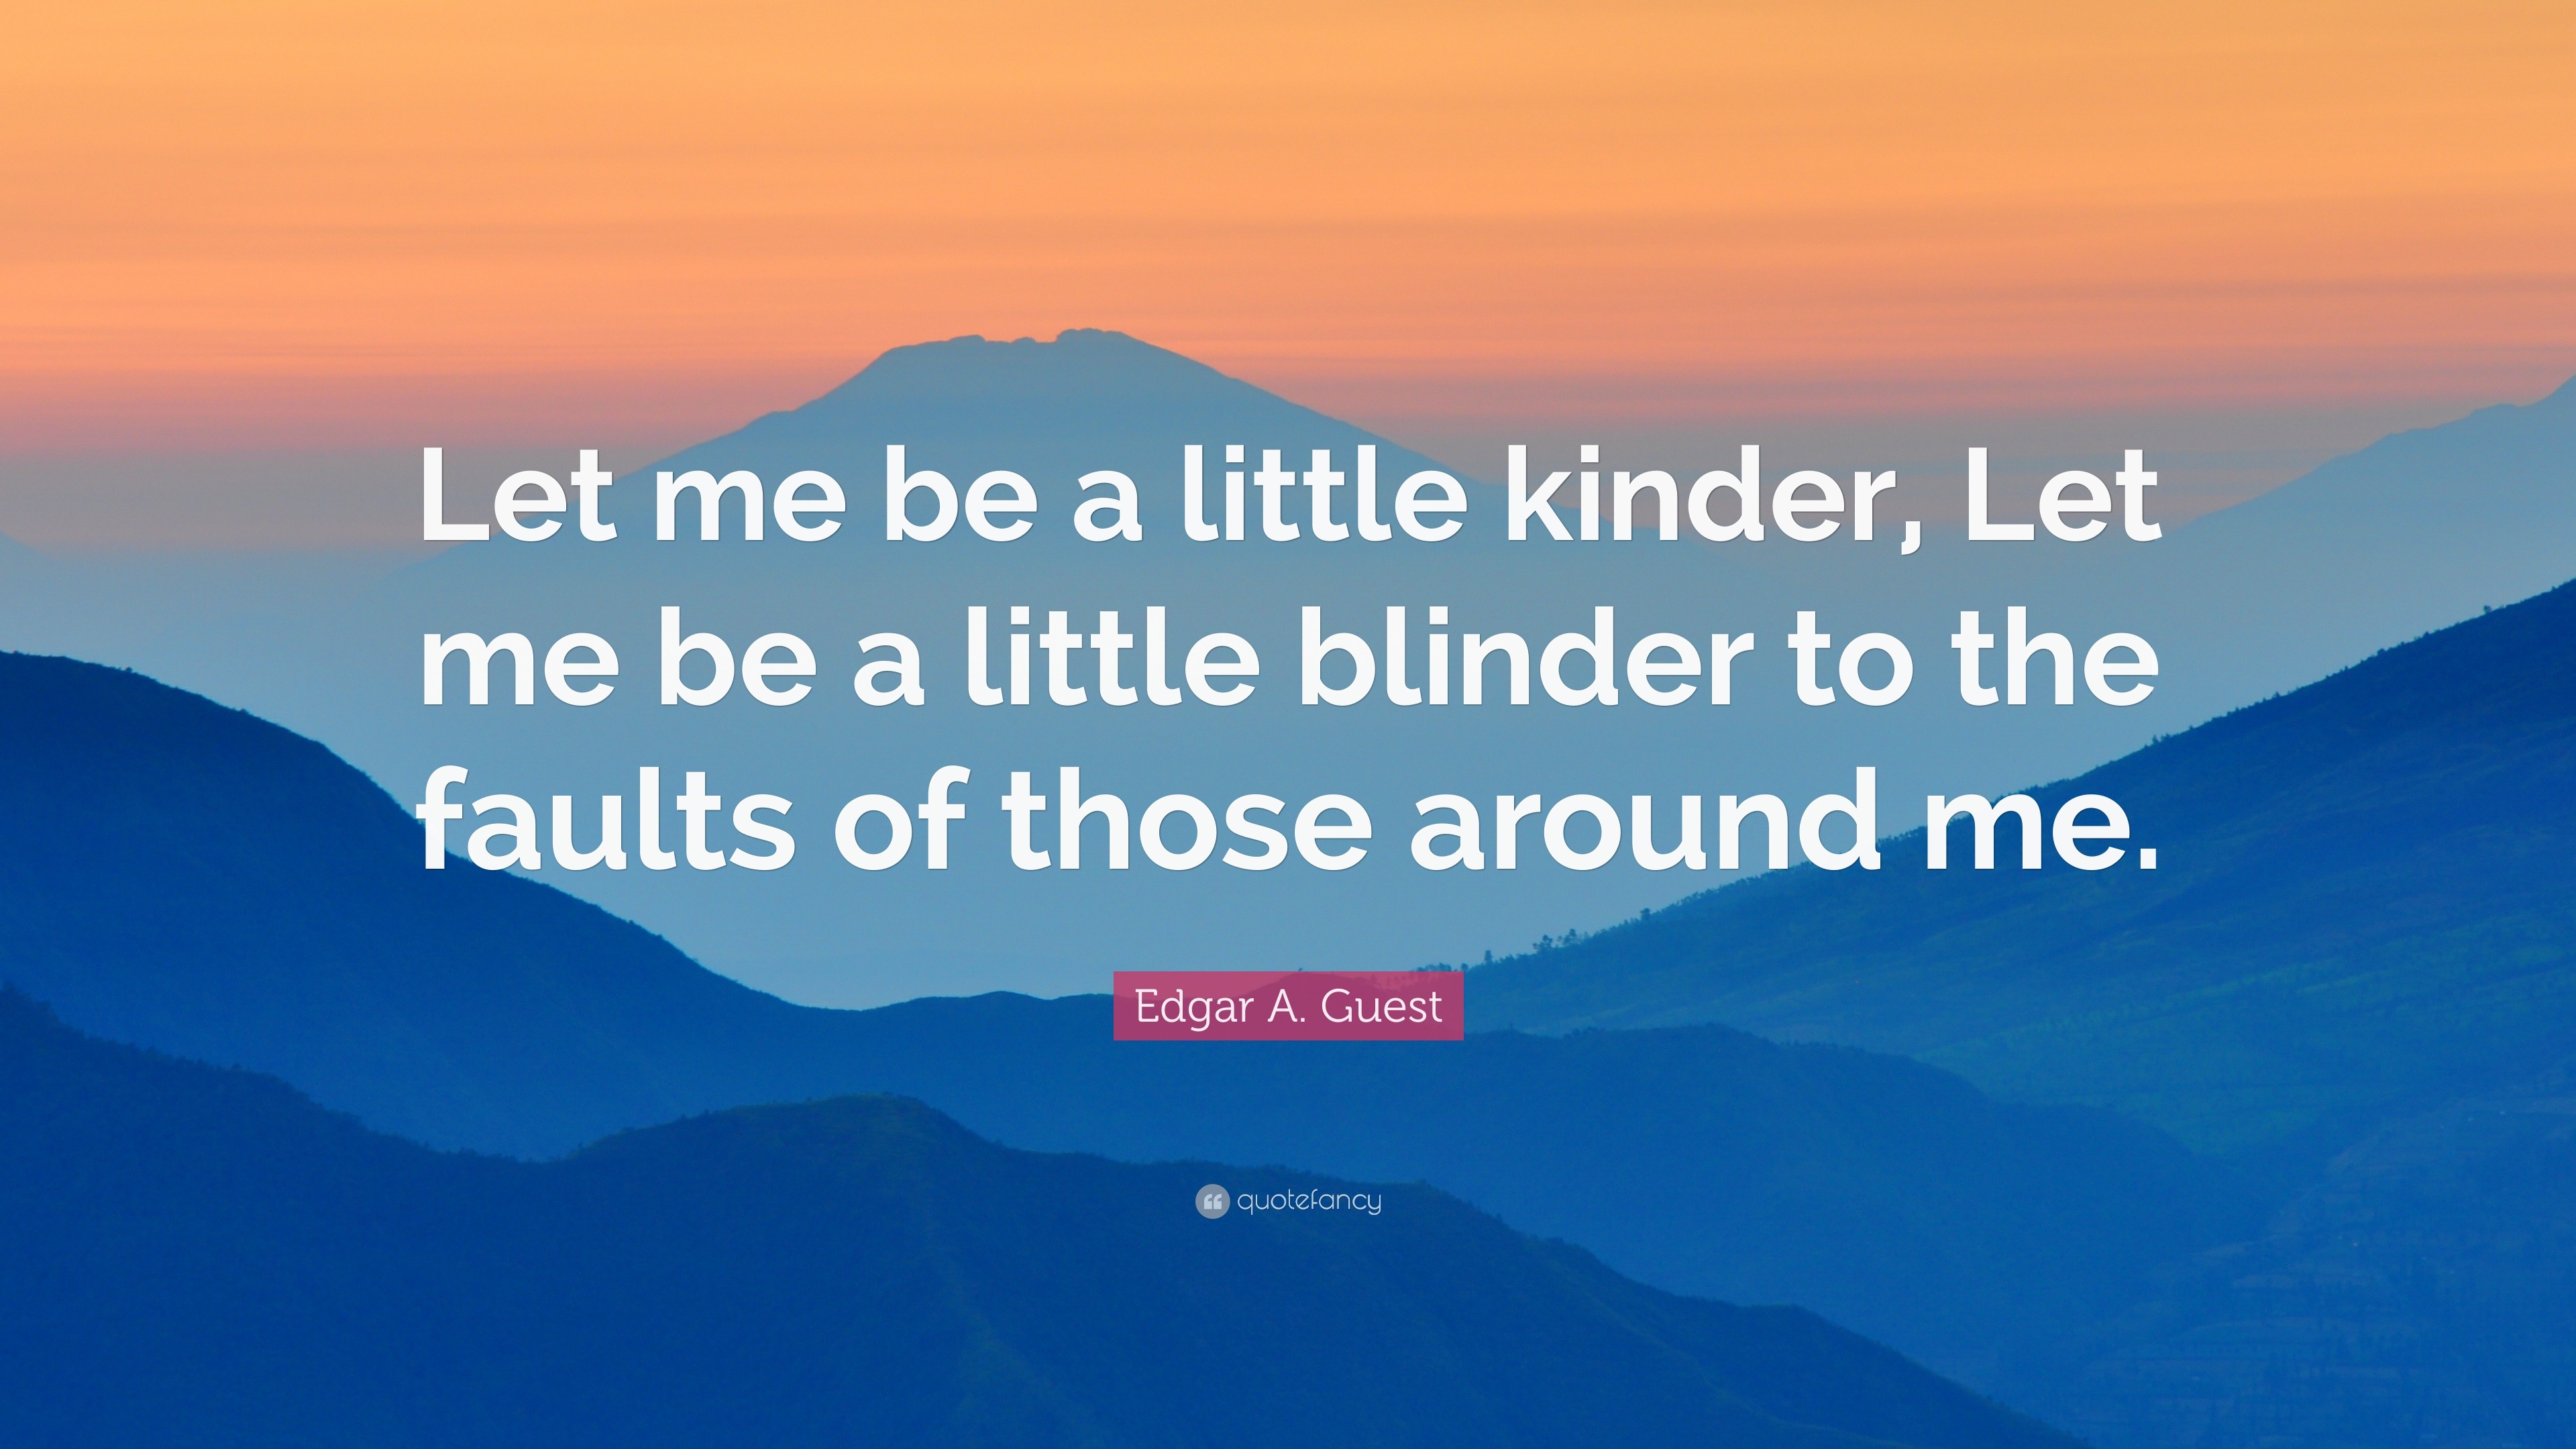 Edgar A. Guest Quote: “Let me be a little kinder, Let me be a little ...